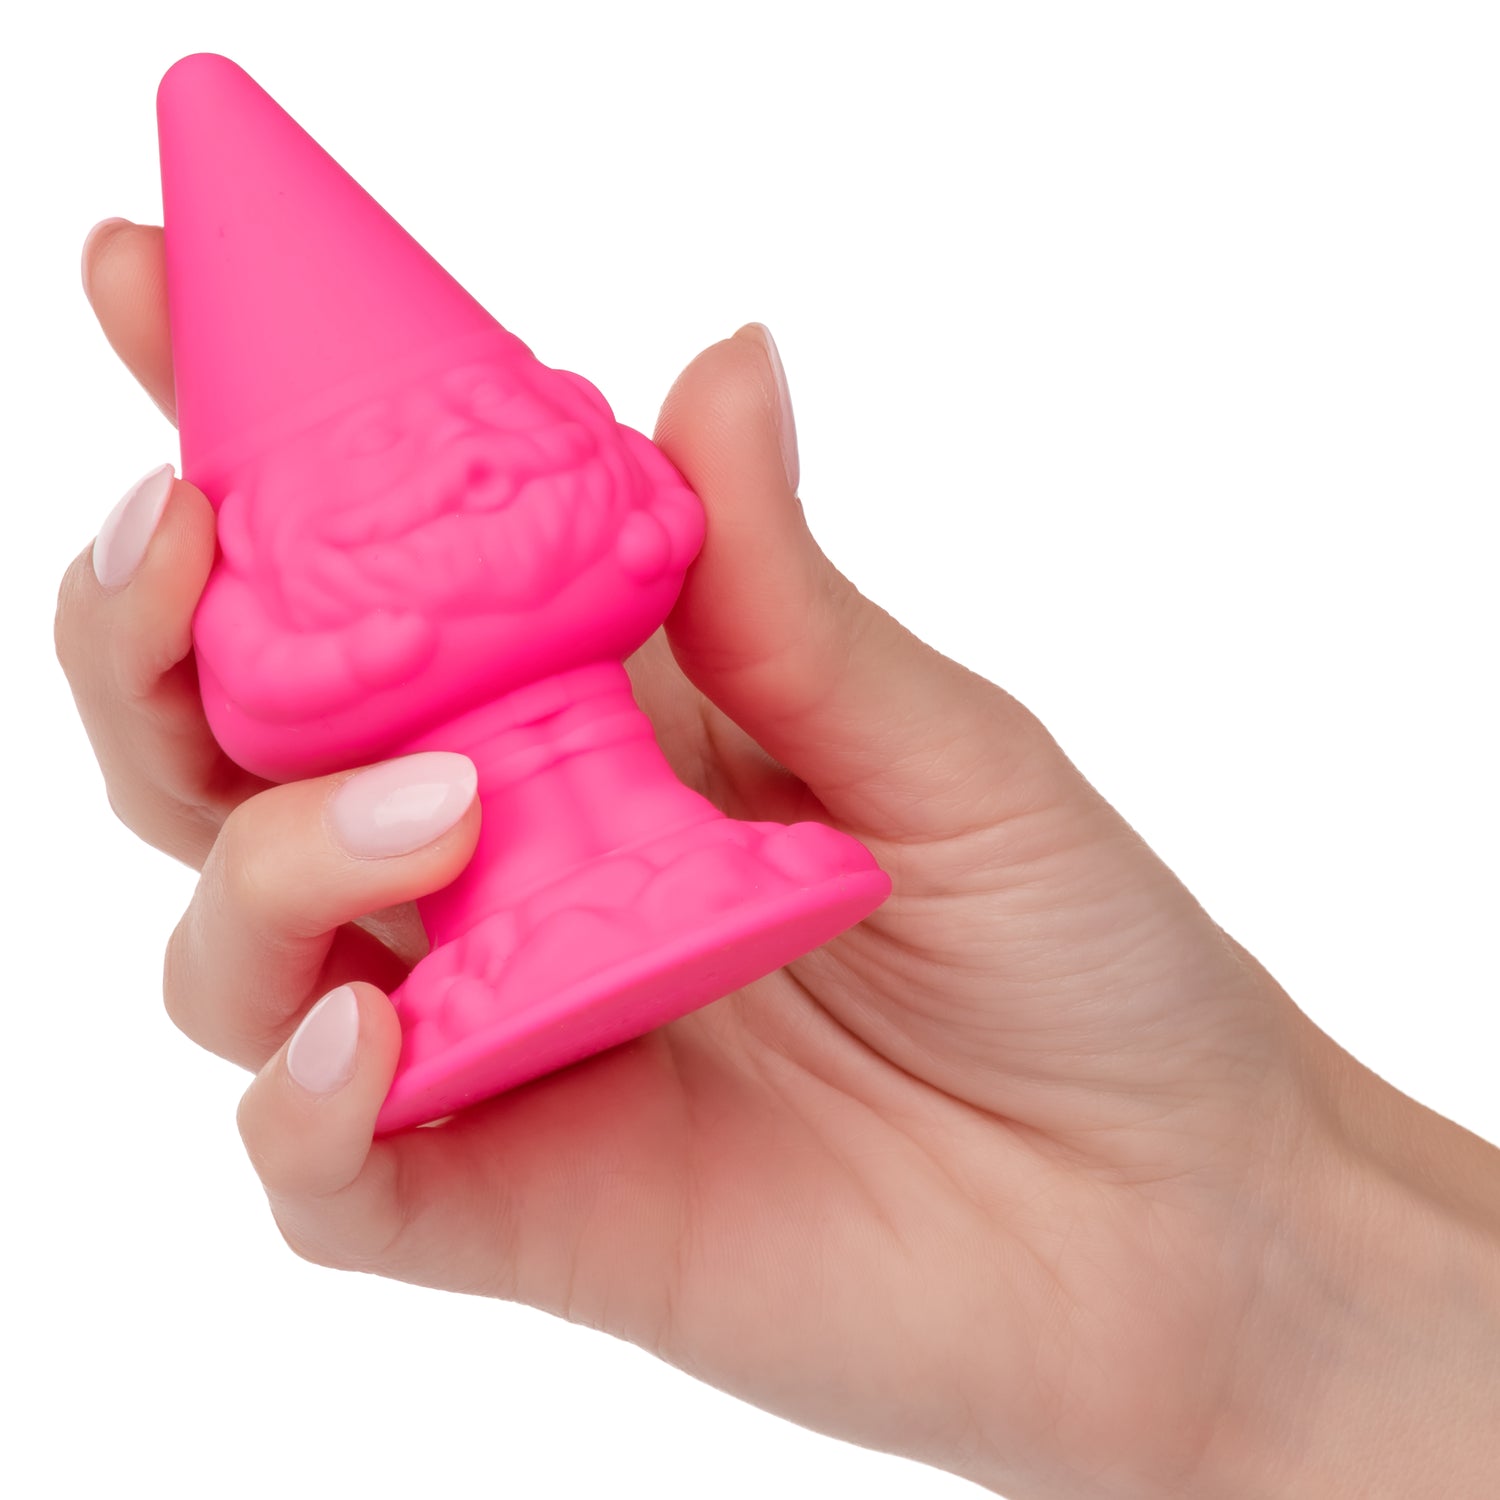 Naughty Bits® Anal Gnome™ Gnome Butt Plug